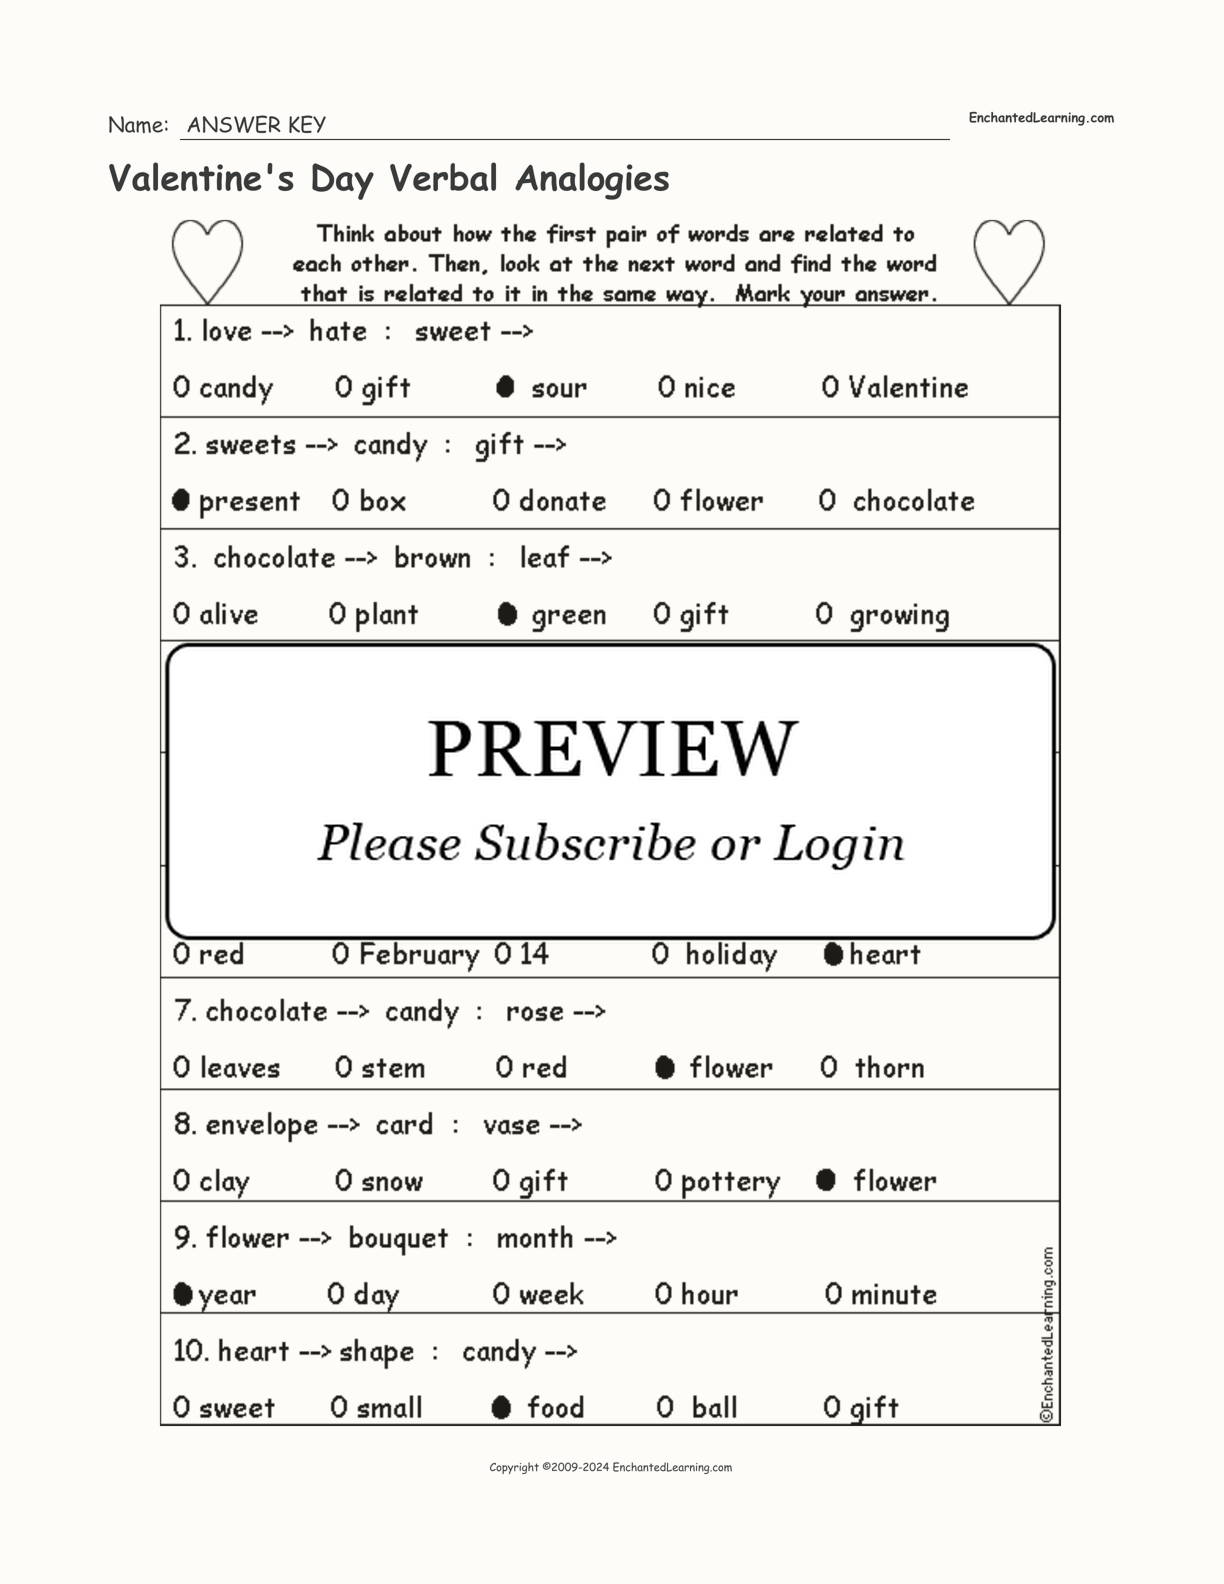 Valentine's Day Verbal Analogies interactive worksheet page 2